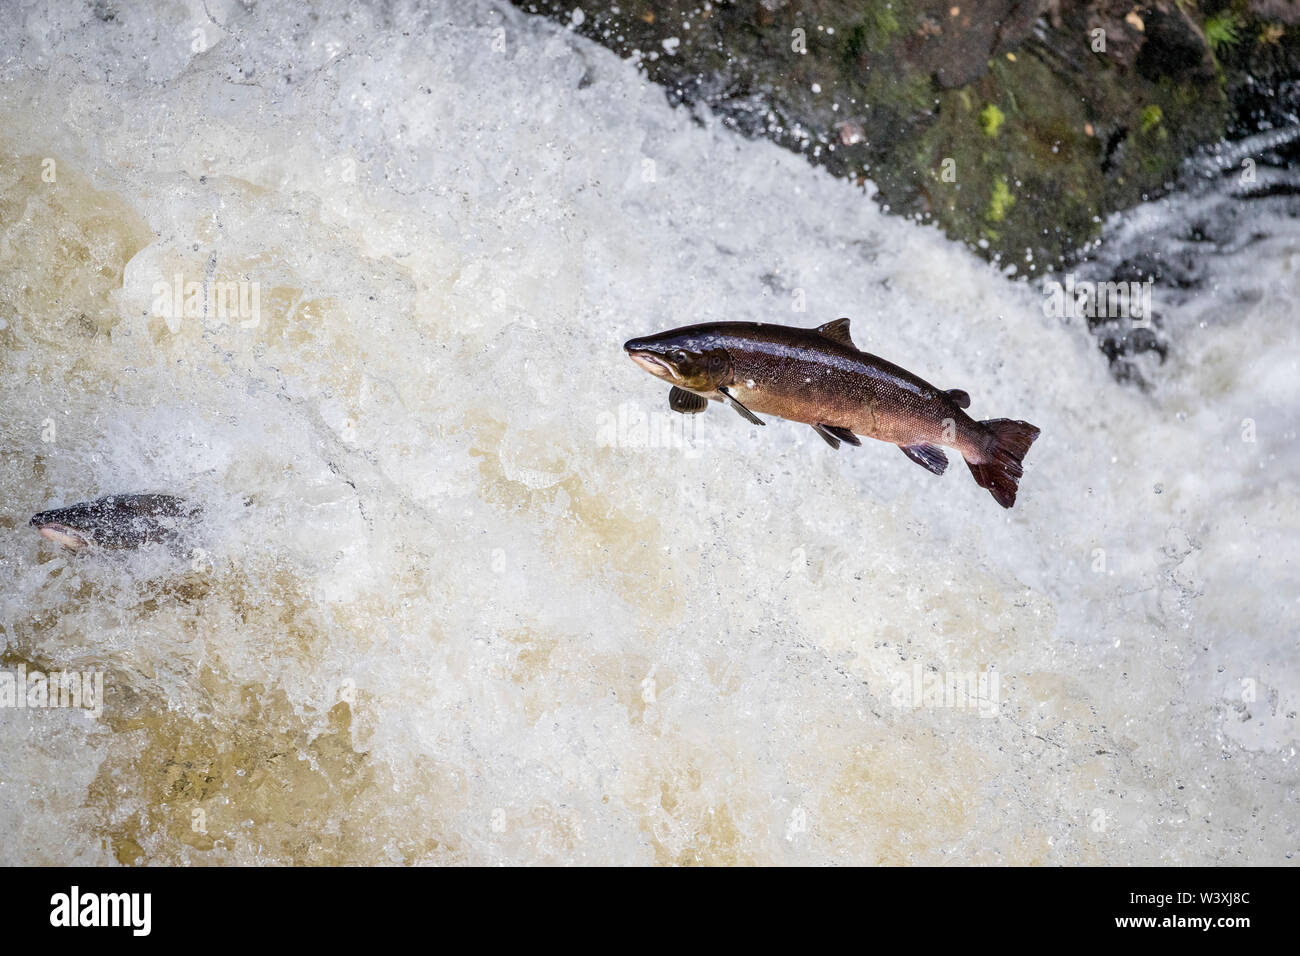 Salmon; Salmo salar; Leaping; Falls of Shin; Scotland; UK Stock Photo